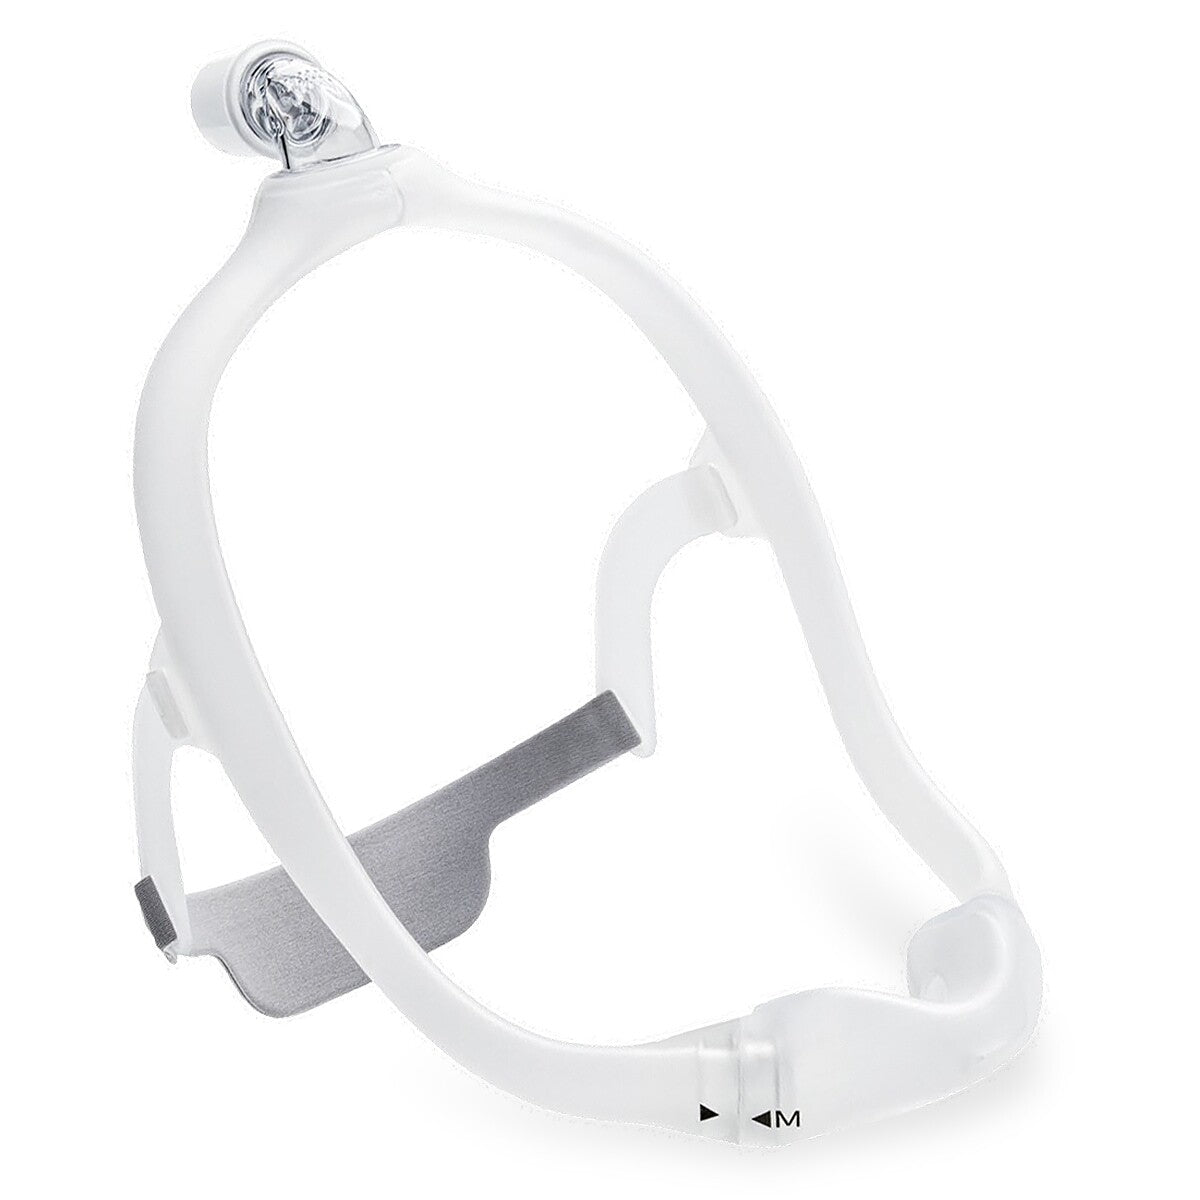 DreamWear Nasal CPAP/BiPAP Mask with Headgear